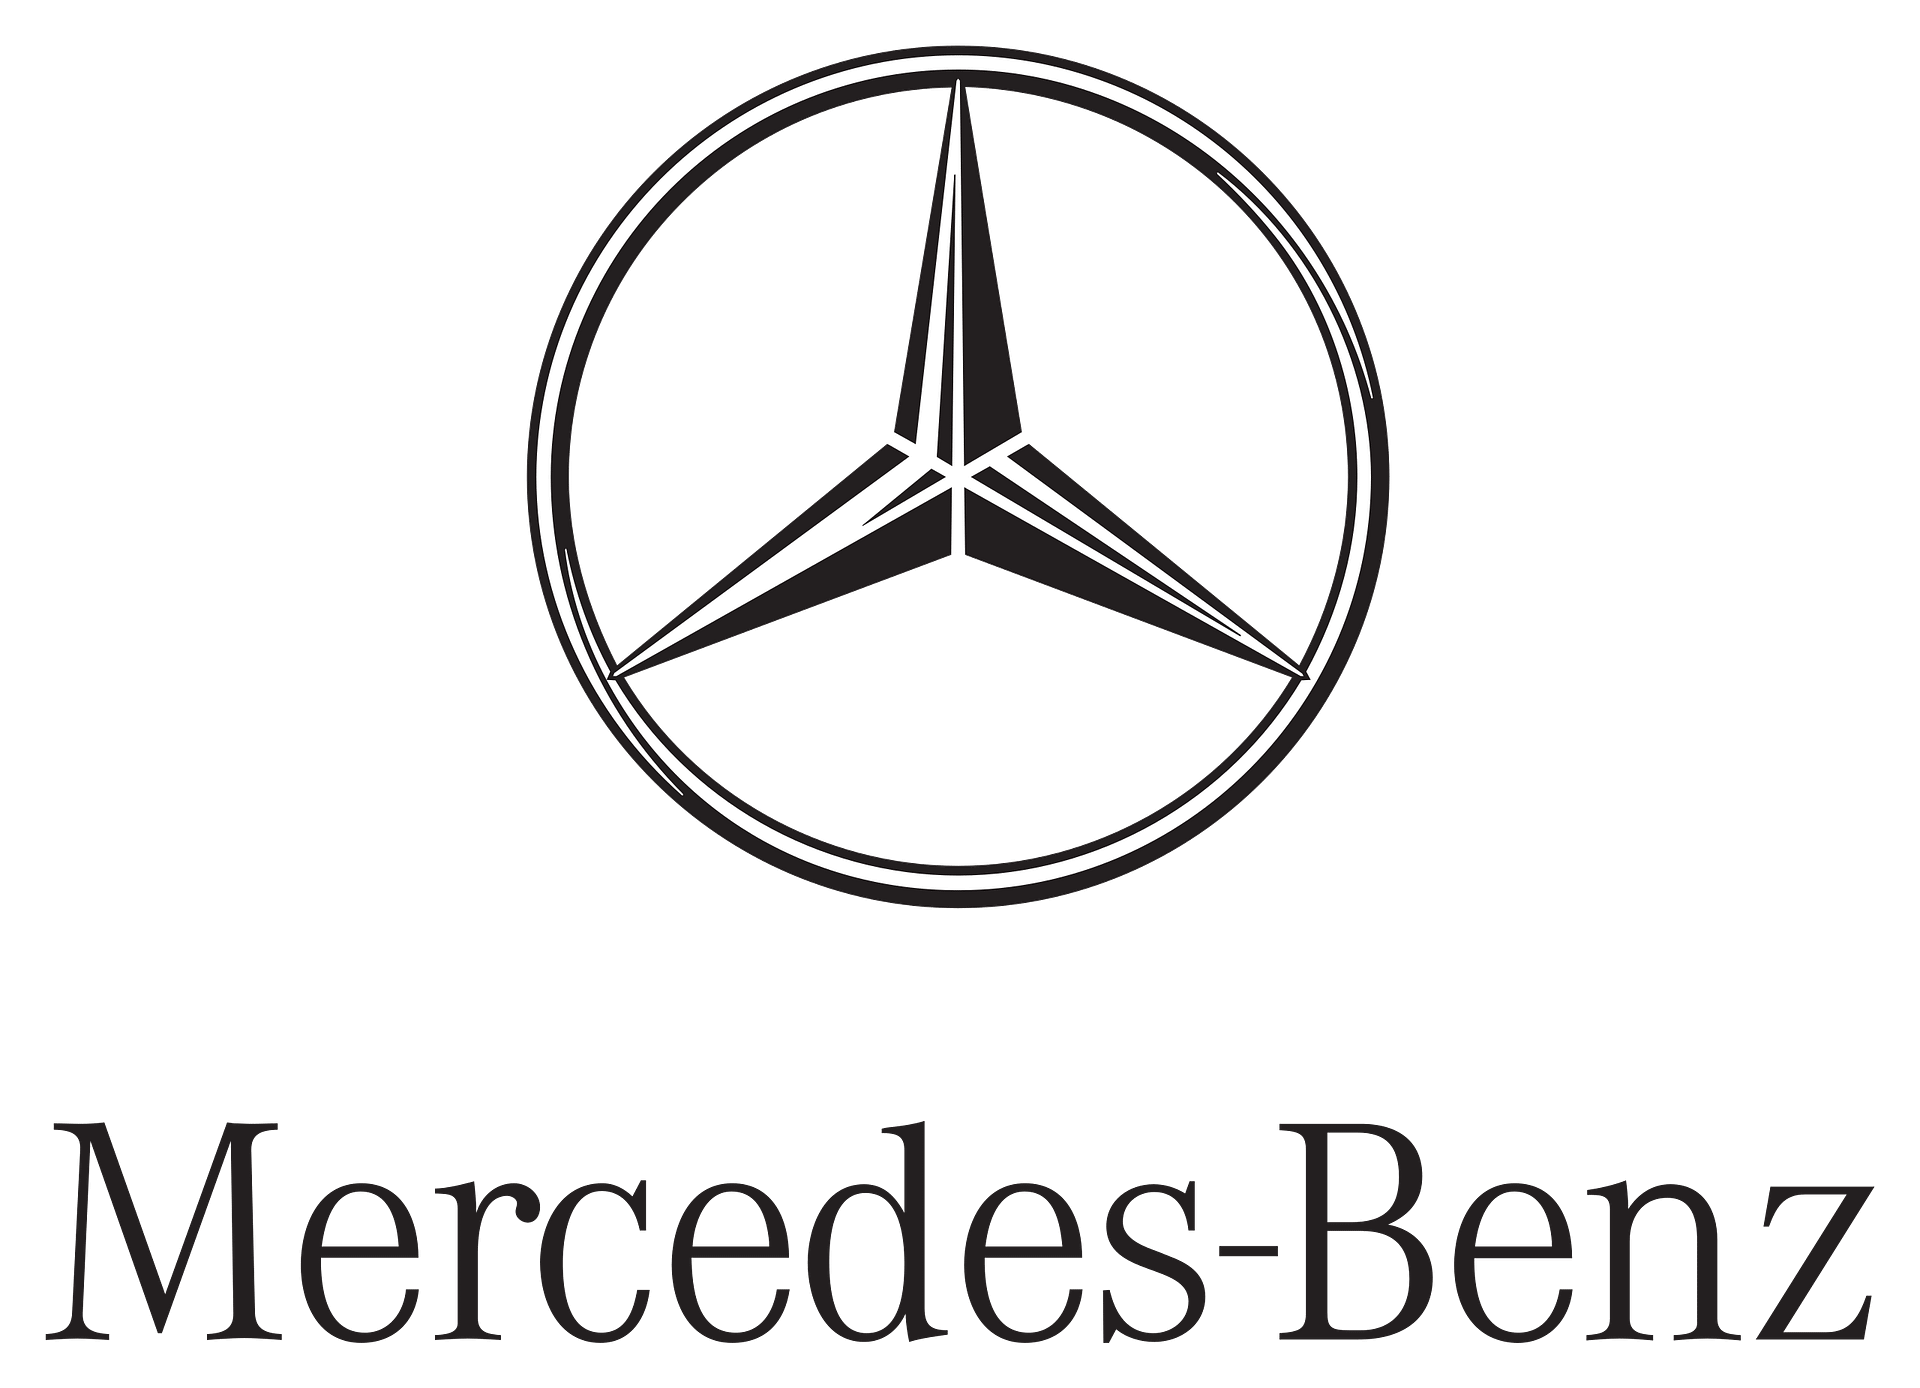 Mercedes-Benz-Logo.svg